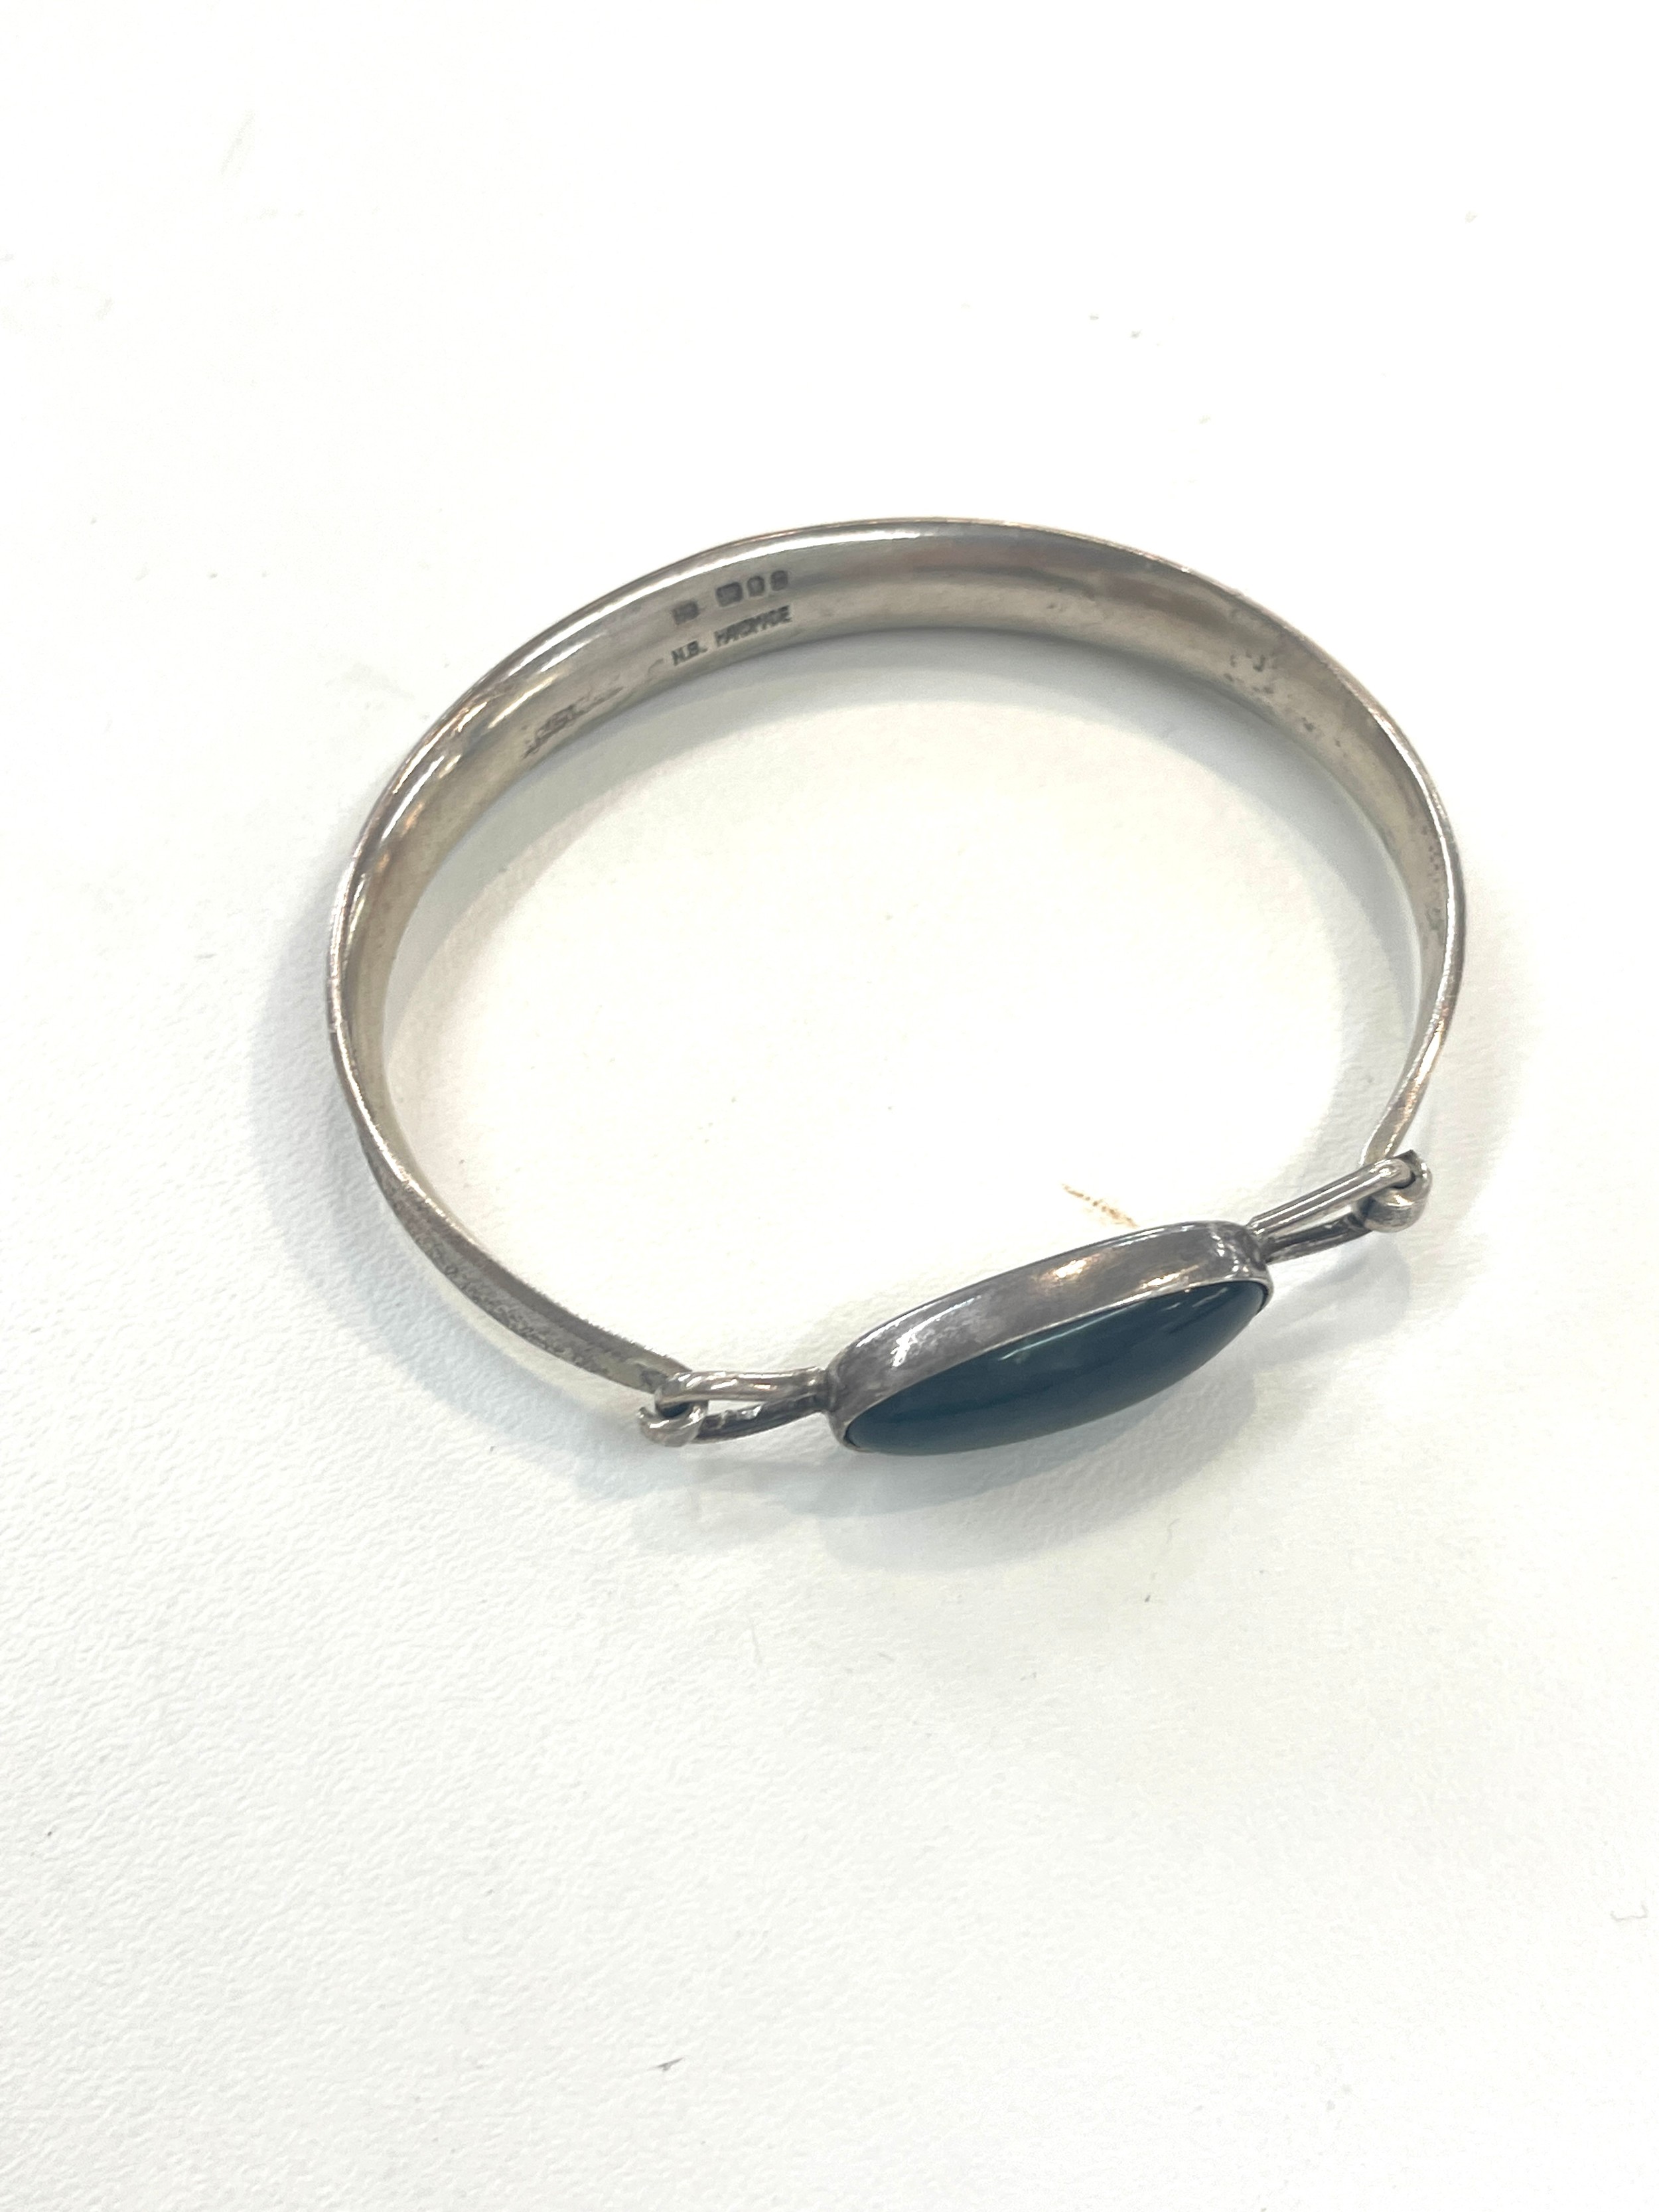 Vintage silver stone set bracelet - Image 2 of 3